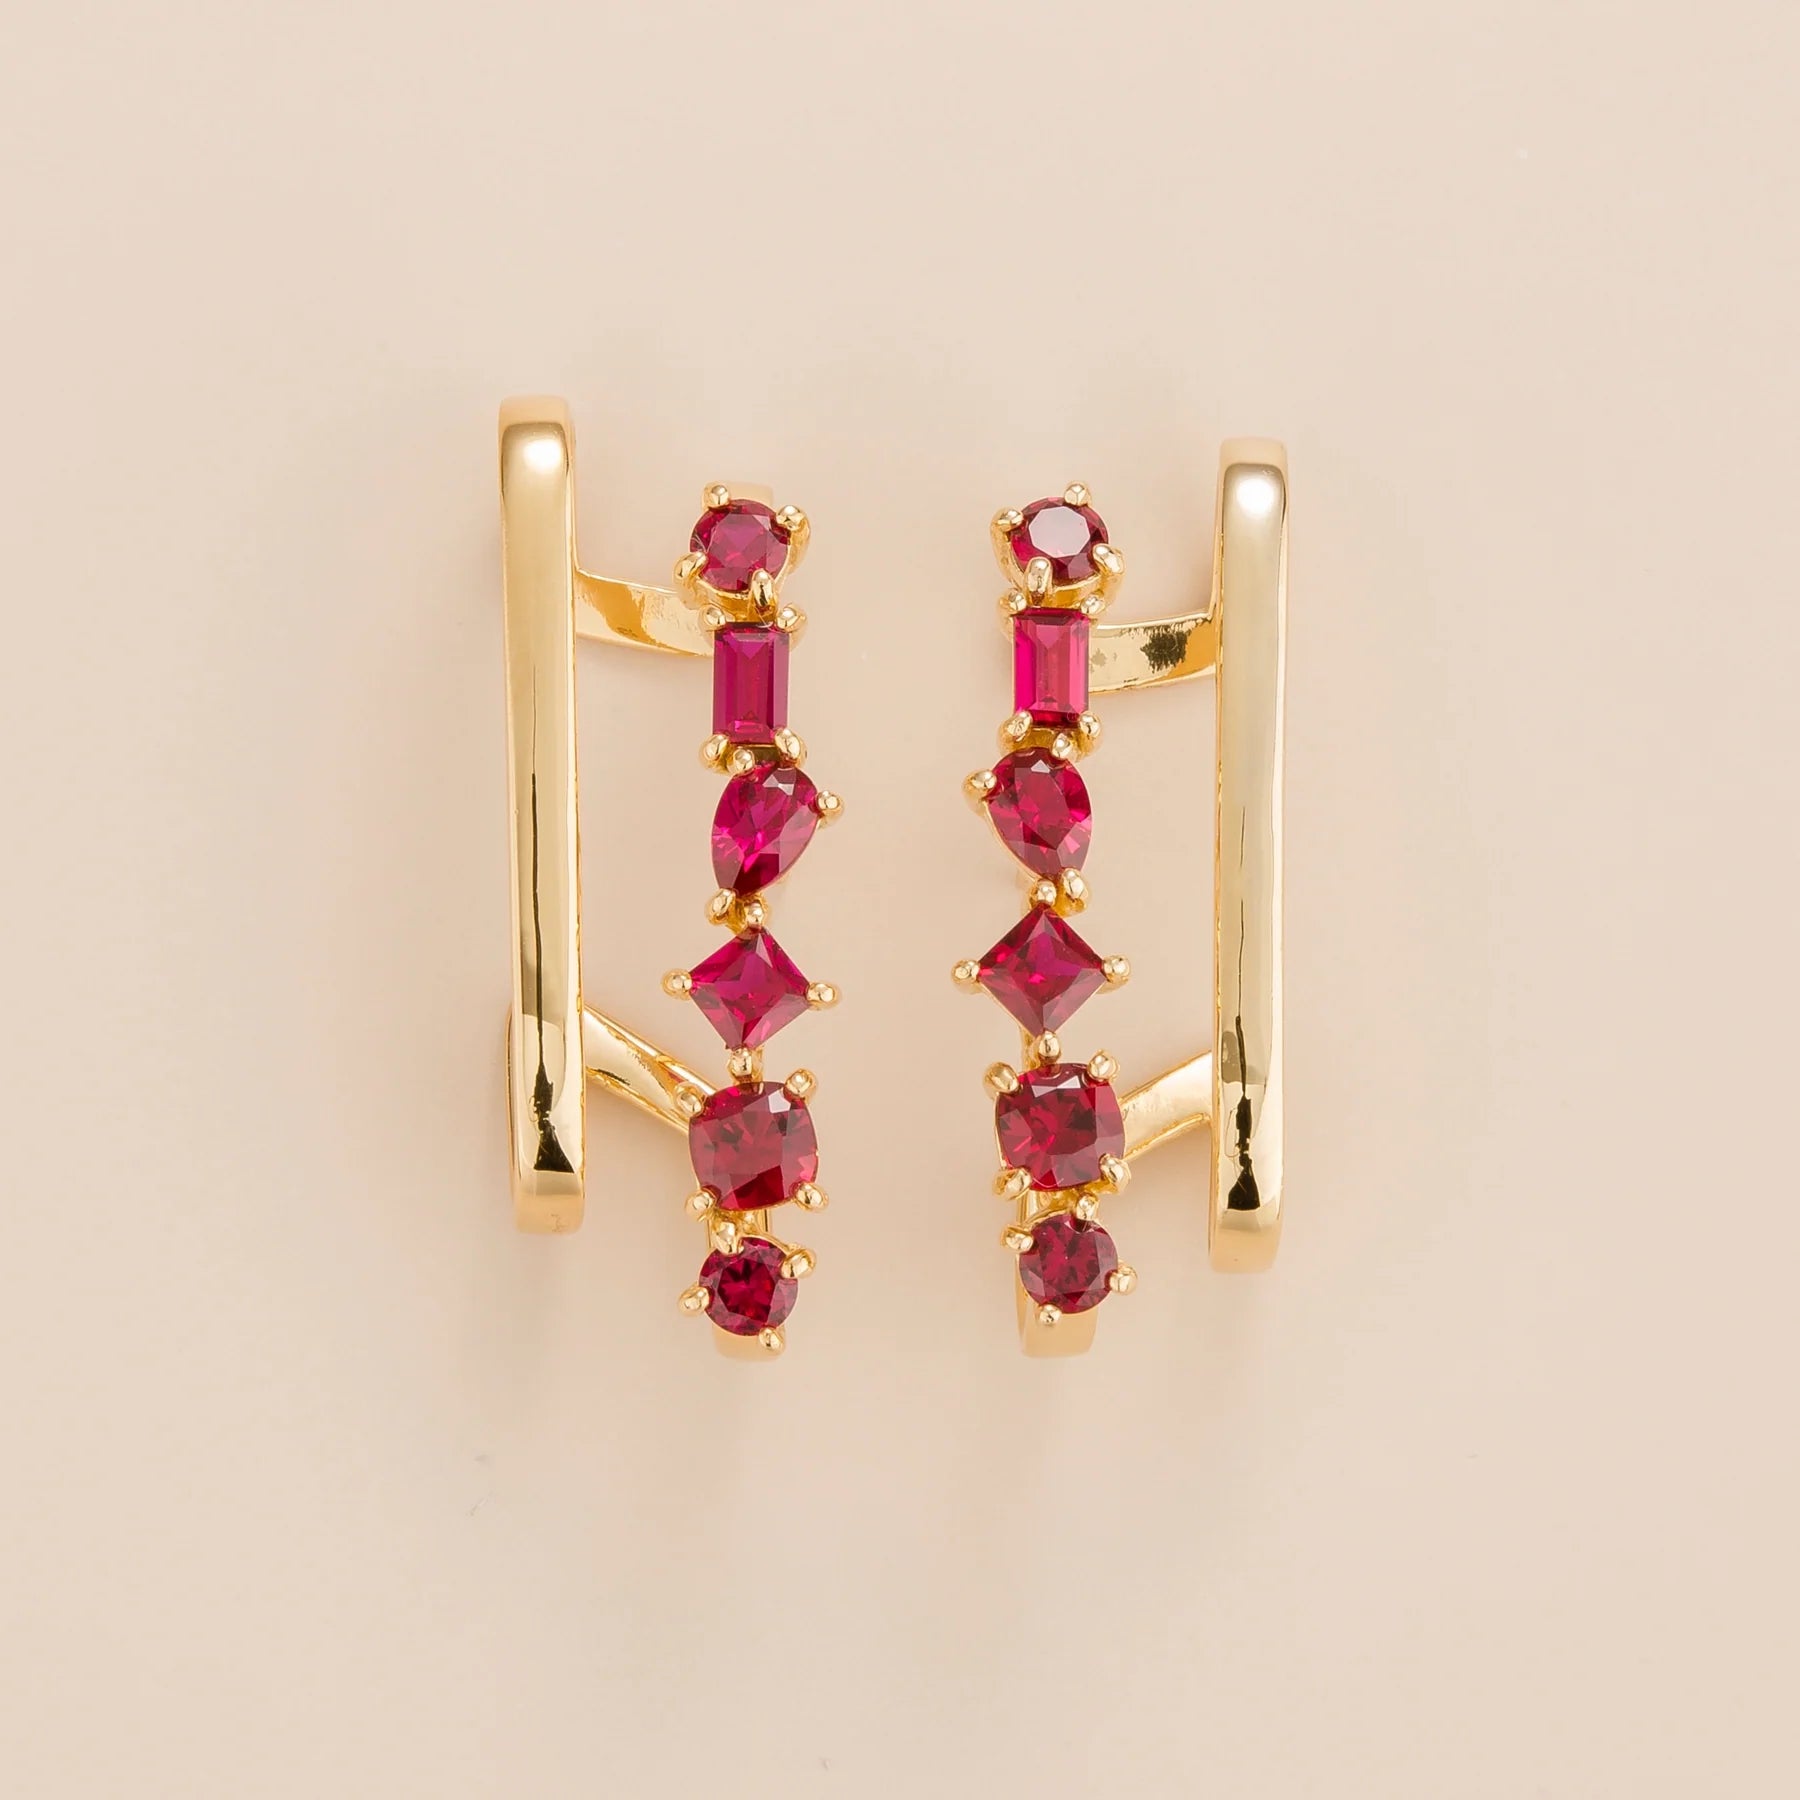 Buy Online Serene Gold Earrings Set With Ruby Bespoke Jewellery Juvetti From London